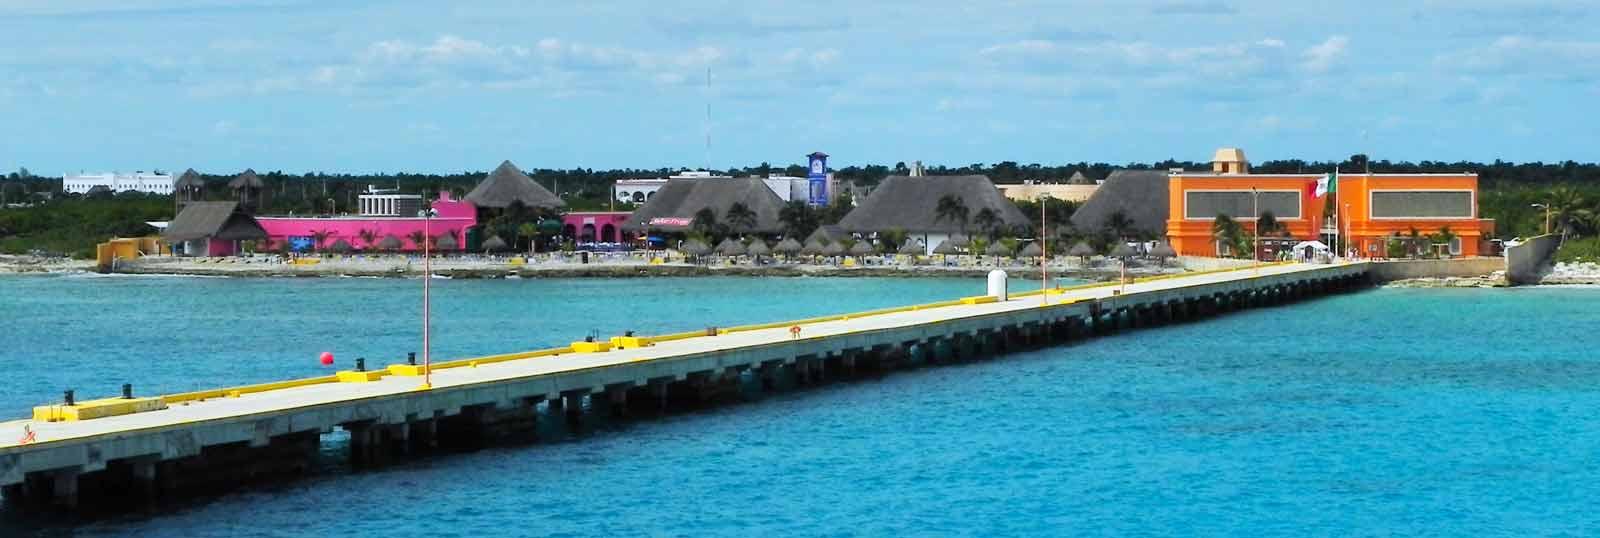 all inclusive costa maya cruise port